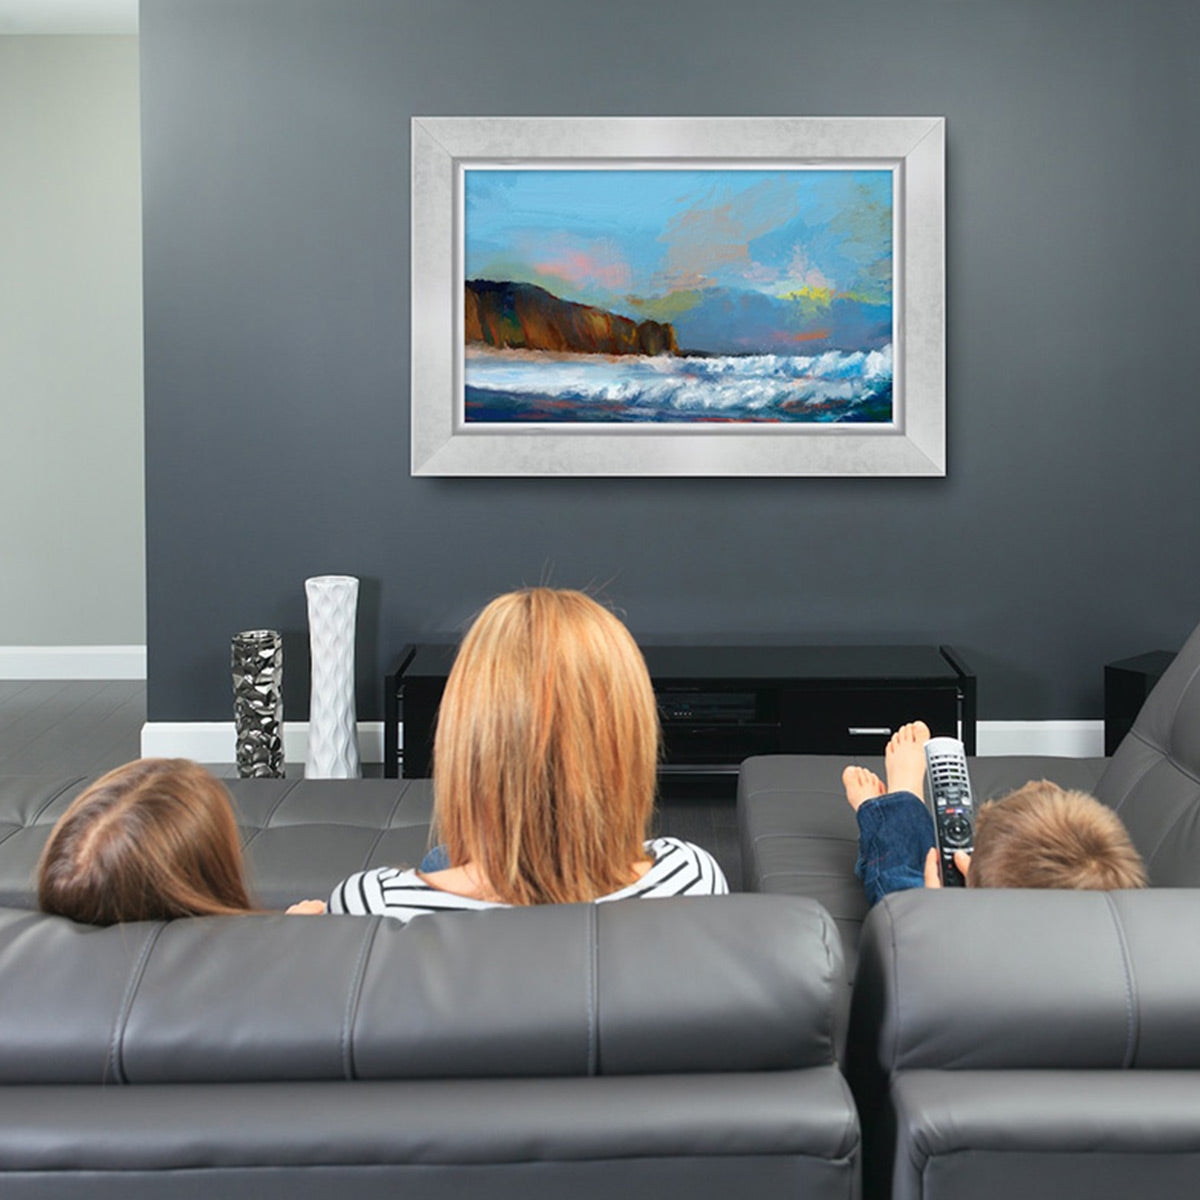 Deco TV Frames Customizable Frame for Samsung The Frame 2021 32" TV (Contemporary Silver)